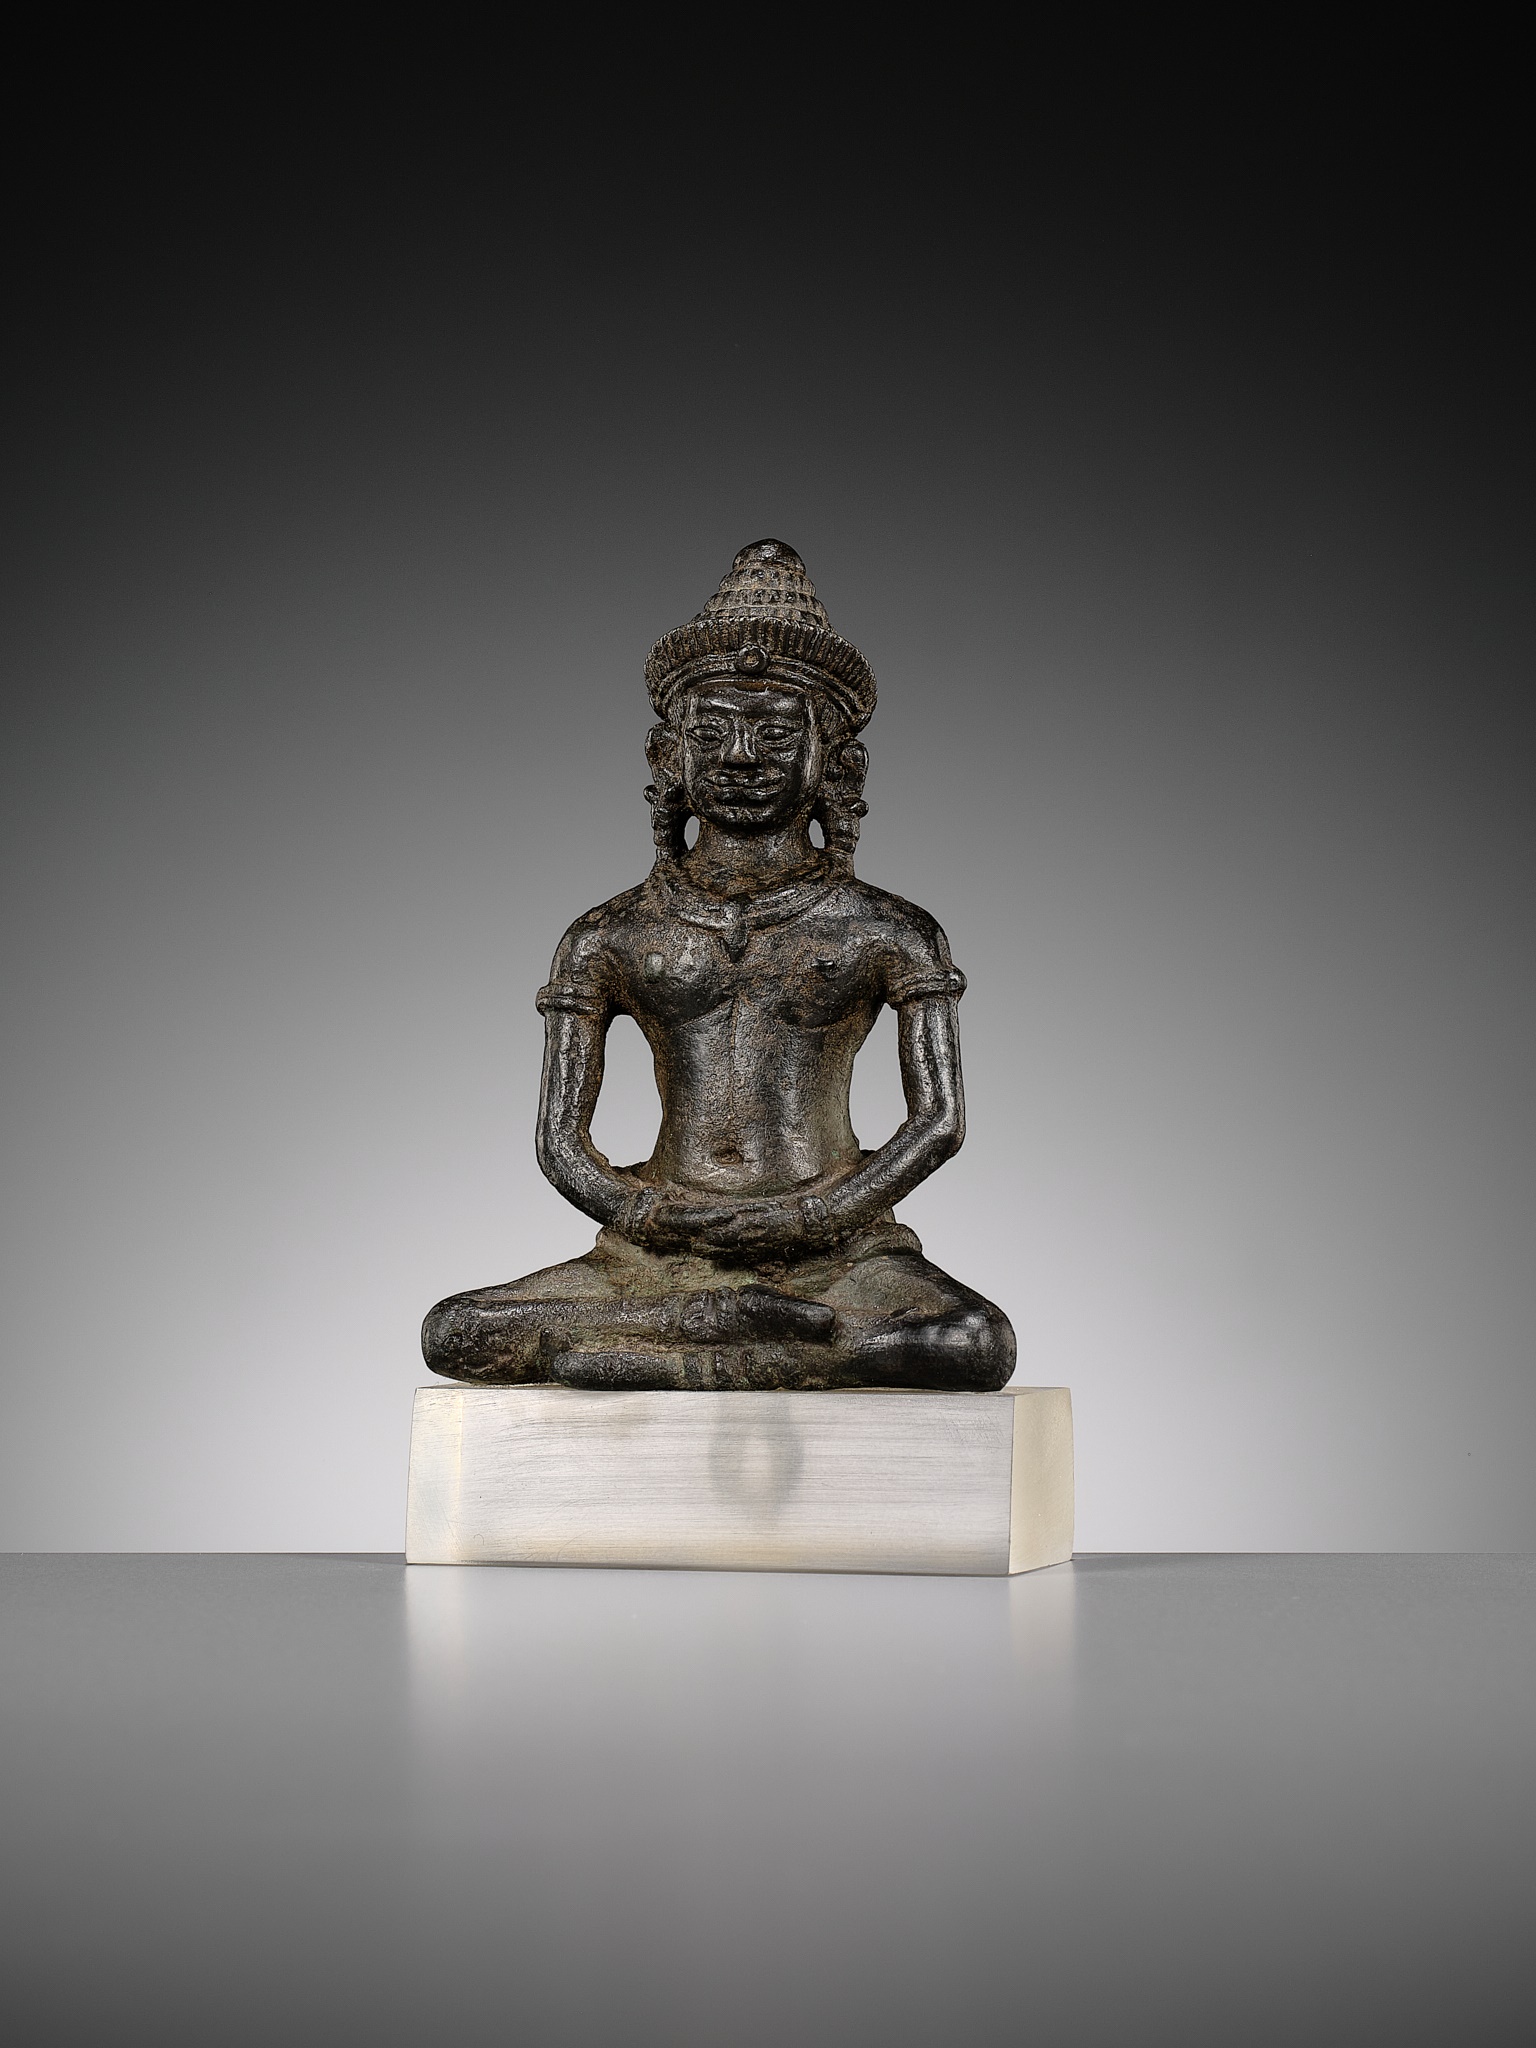 A BRONZE FIGURE OF BUDDHA, ANGKOR PERIOD, KHMER EMPIRE, 12TH CENTURY - Image 2 of 9